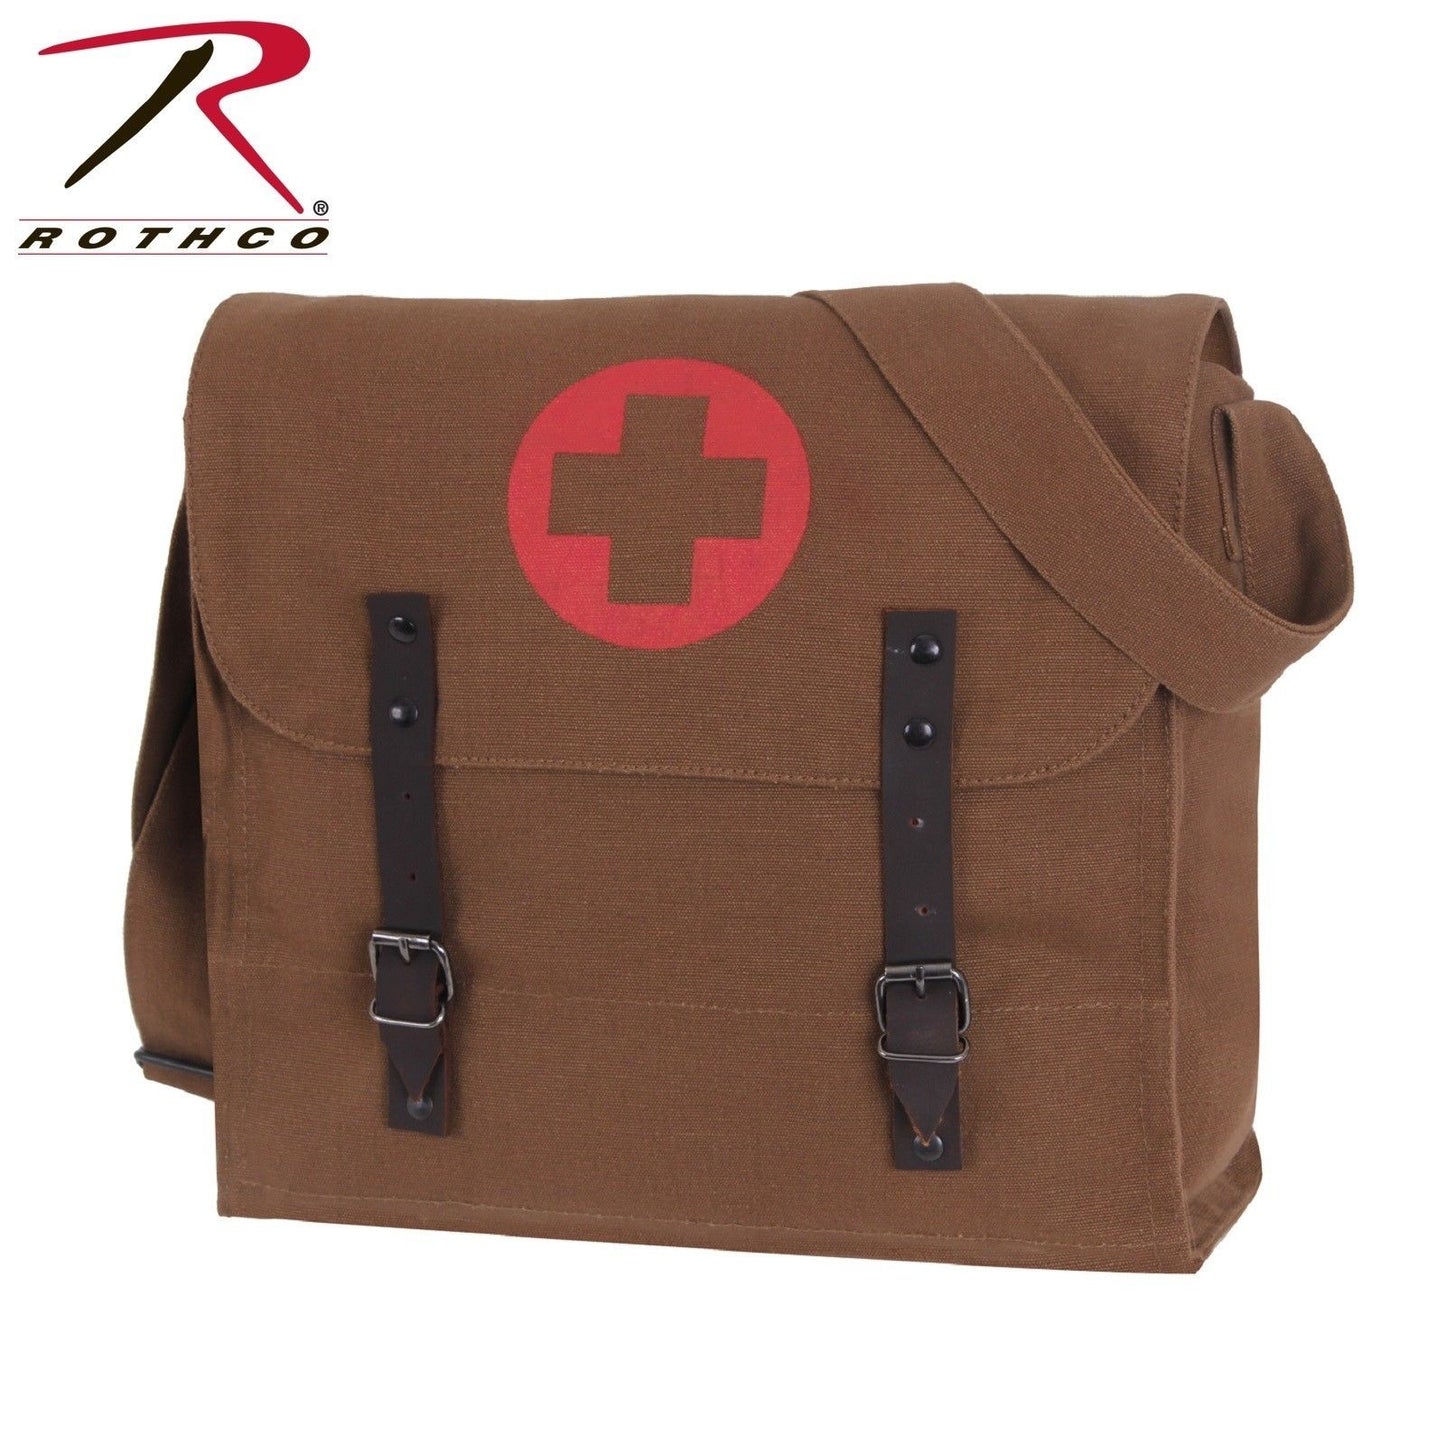 Rothco Brown Vintage Medic Bag With Cross - Medic Shoulder Bag